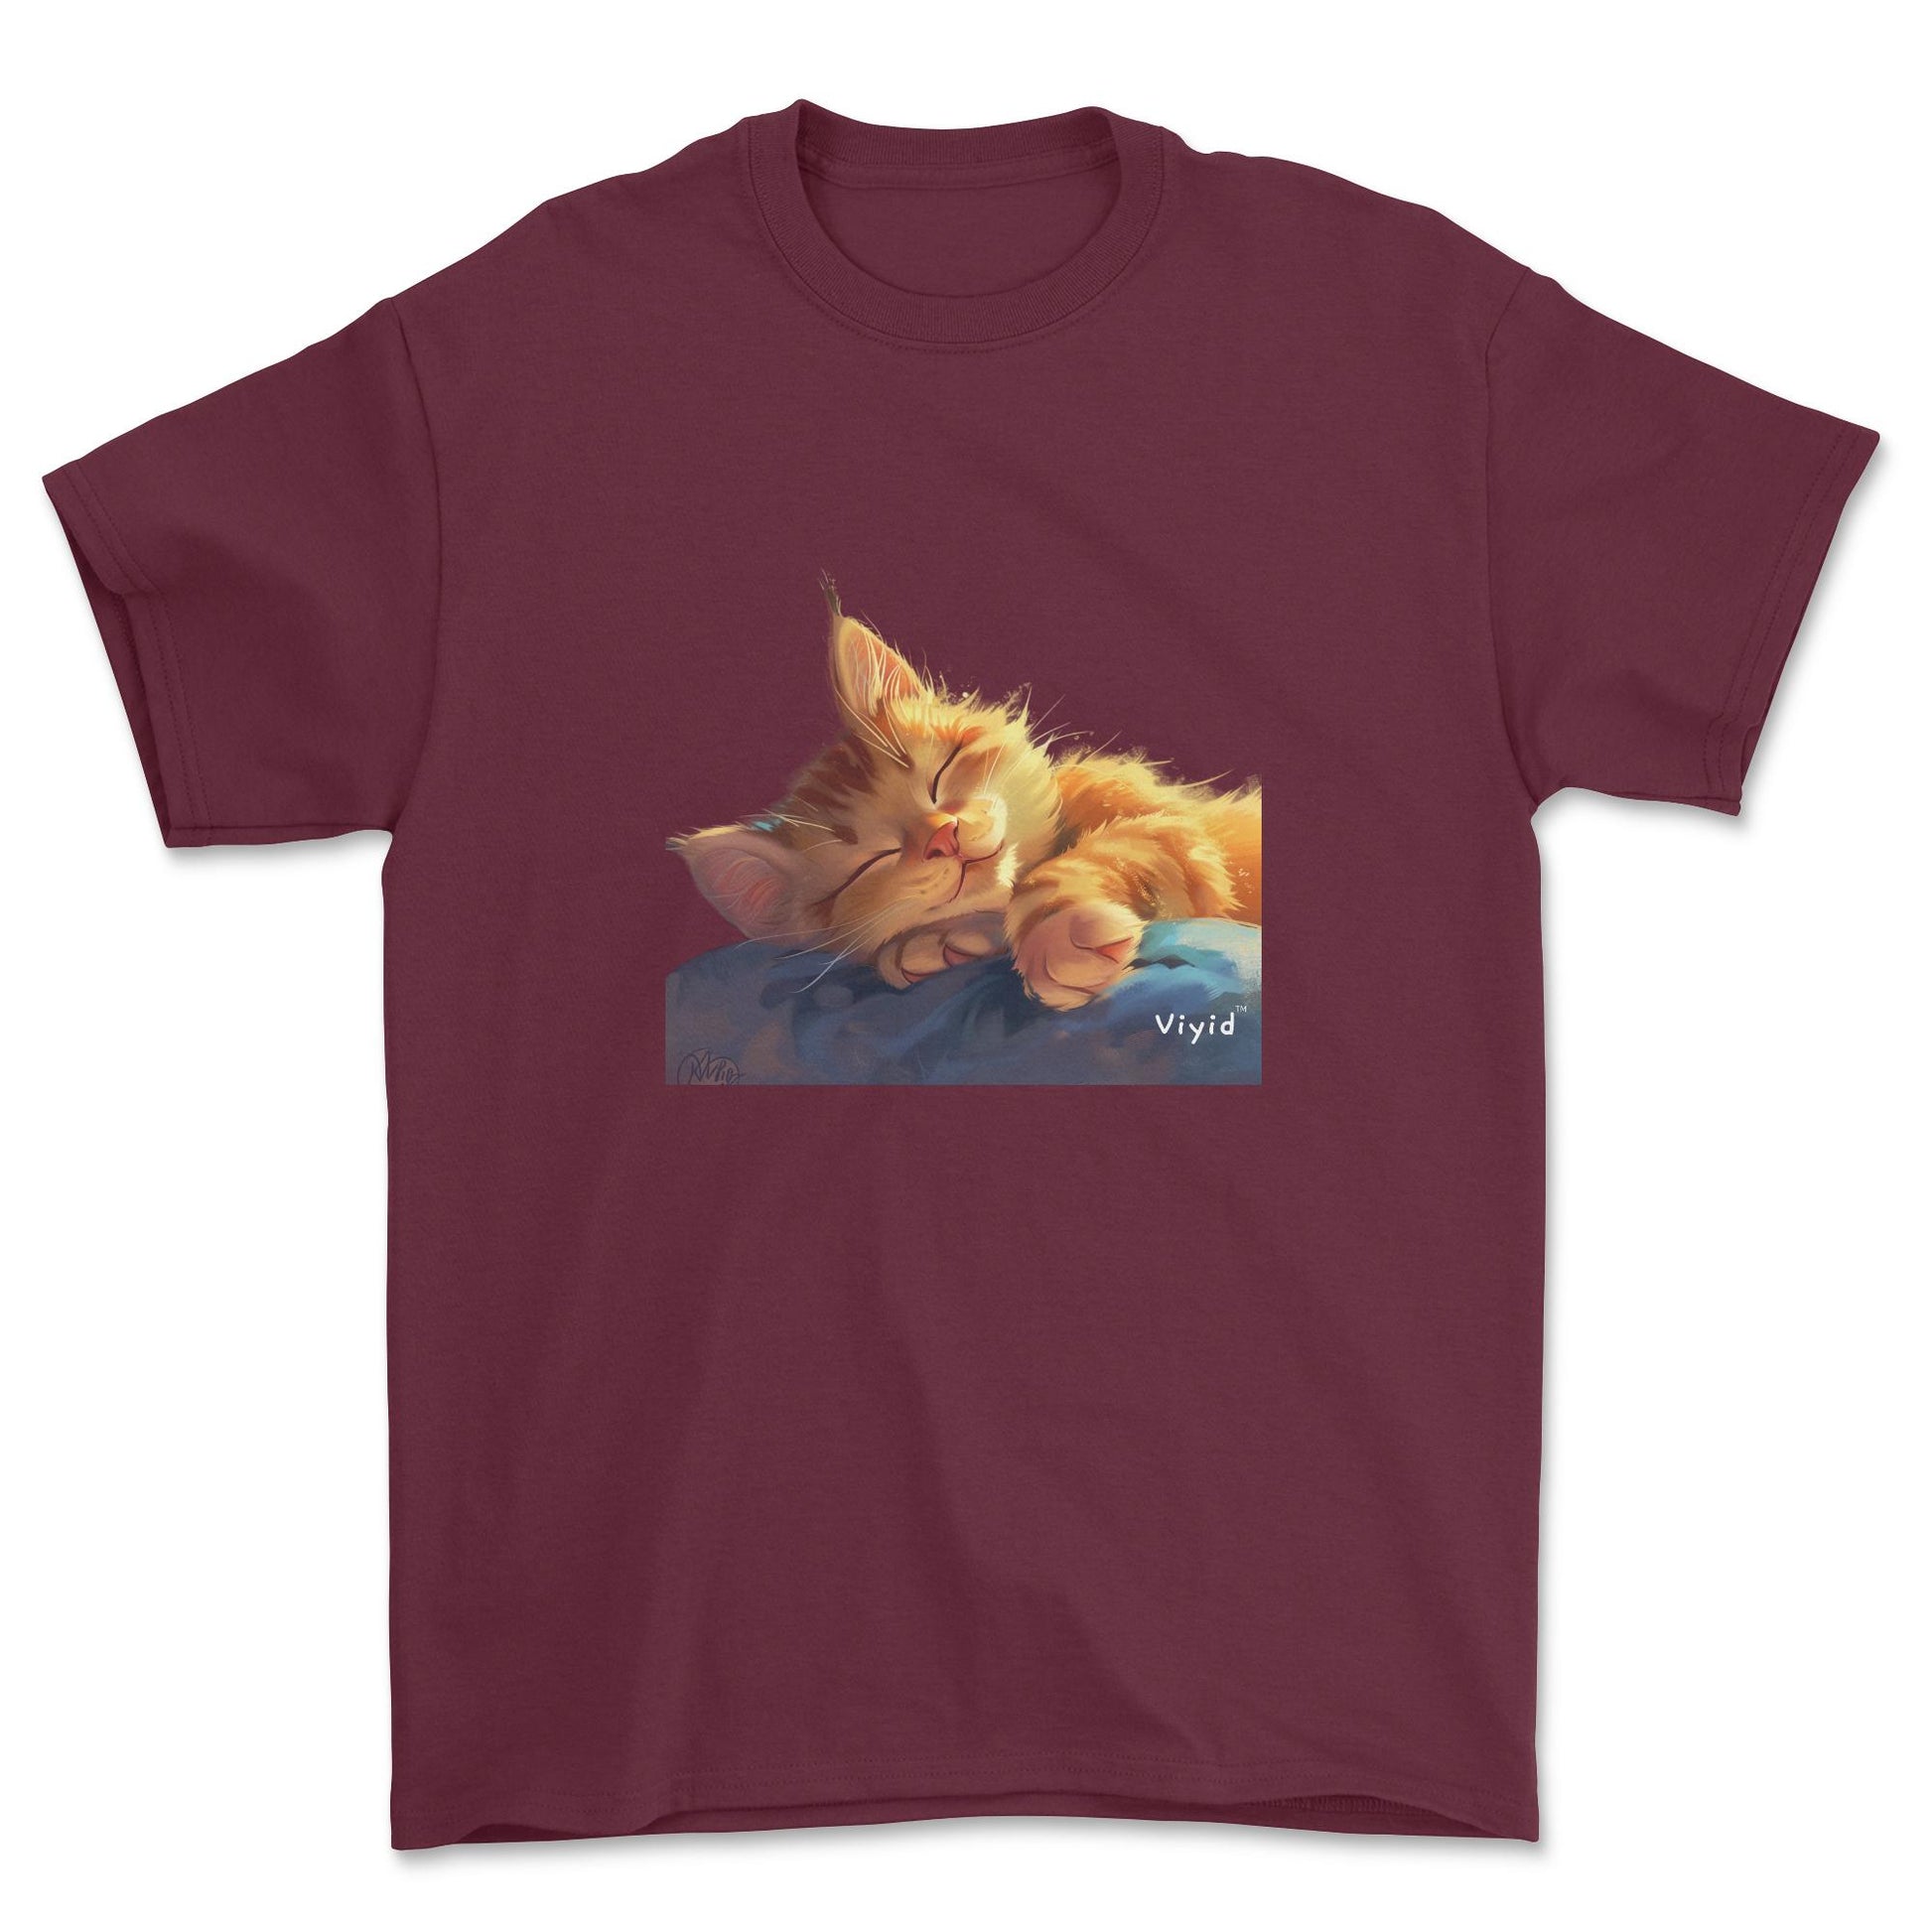 sleeping ginger cat adult t-shirt maroon